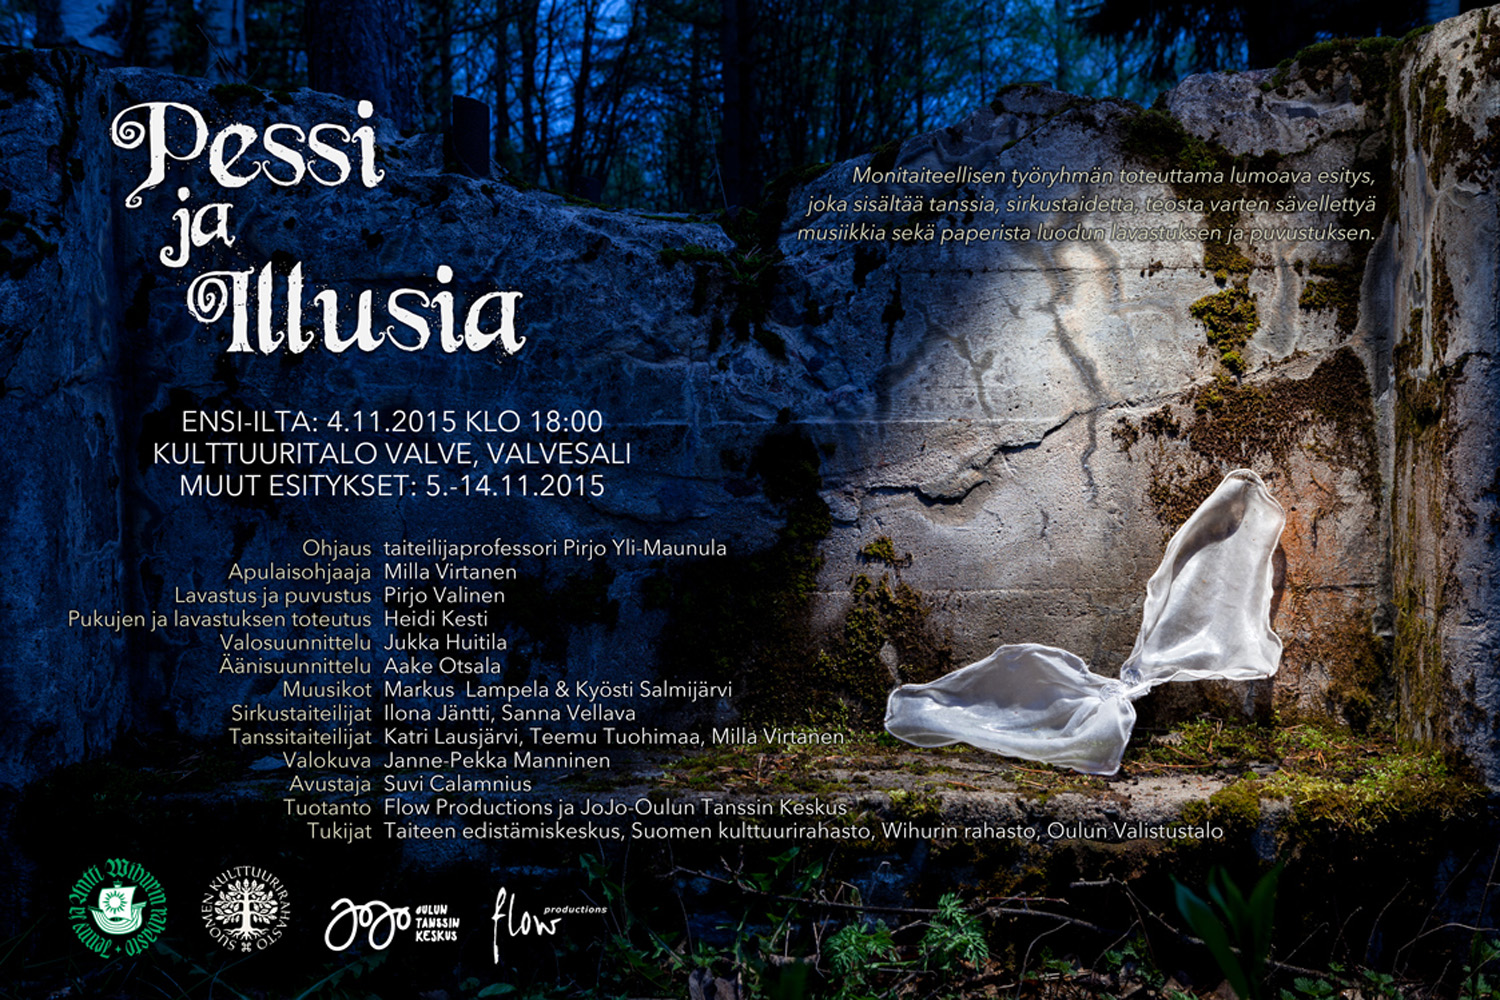  Flyer for Pessi ja Illusia. 